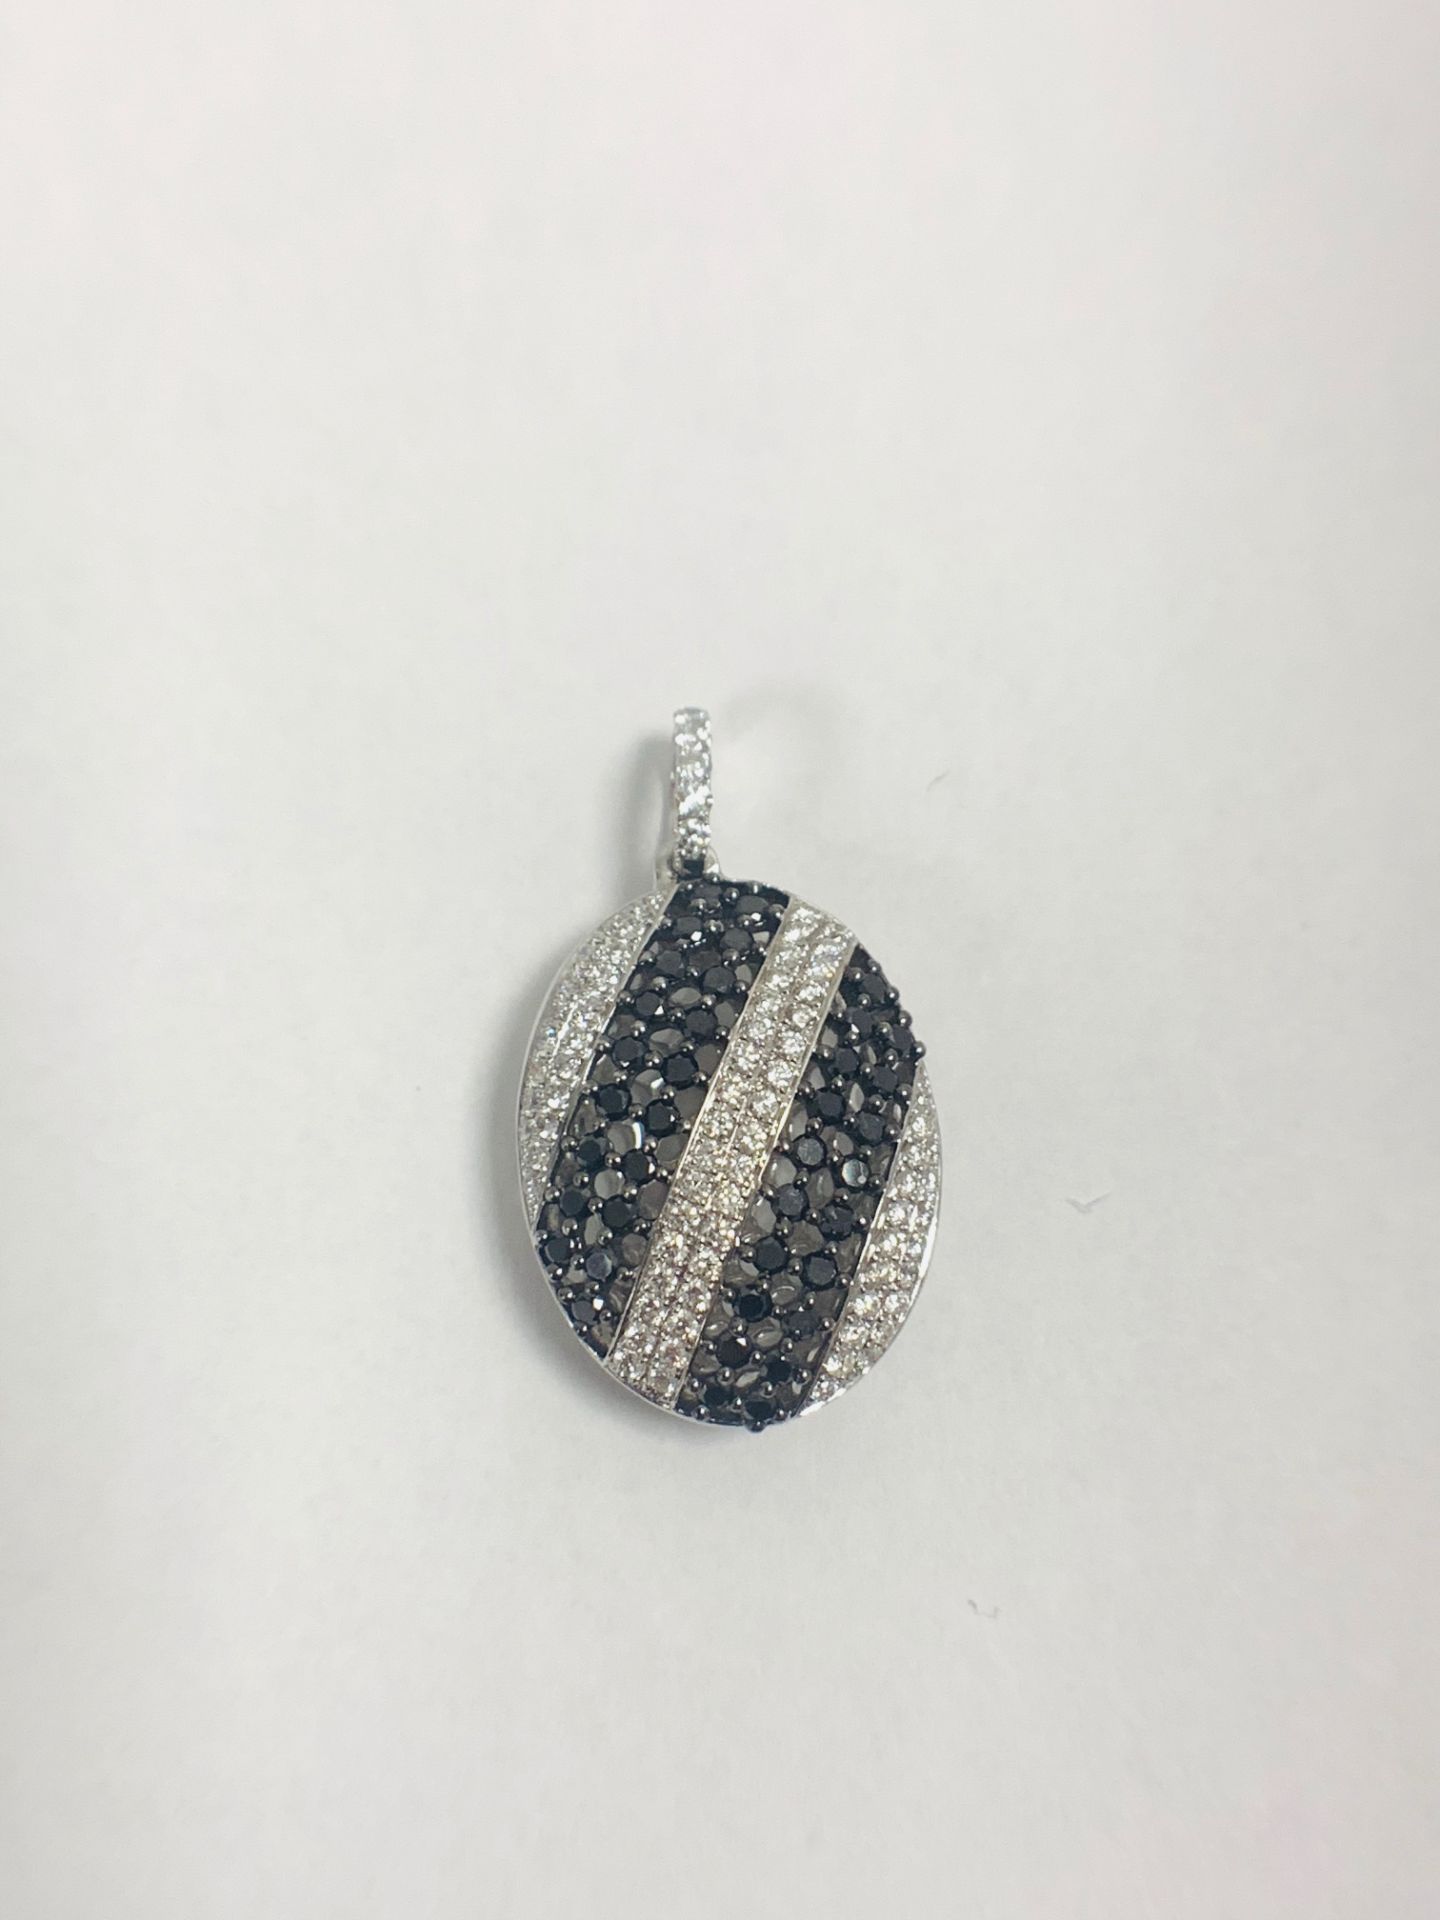 18ct White Gold Diamond pendant featuring 38 round cut, black Diamonds (0.95ct TBDW)